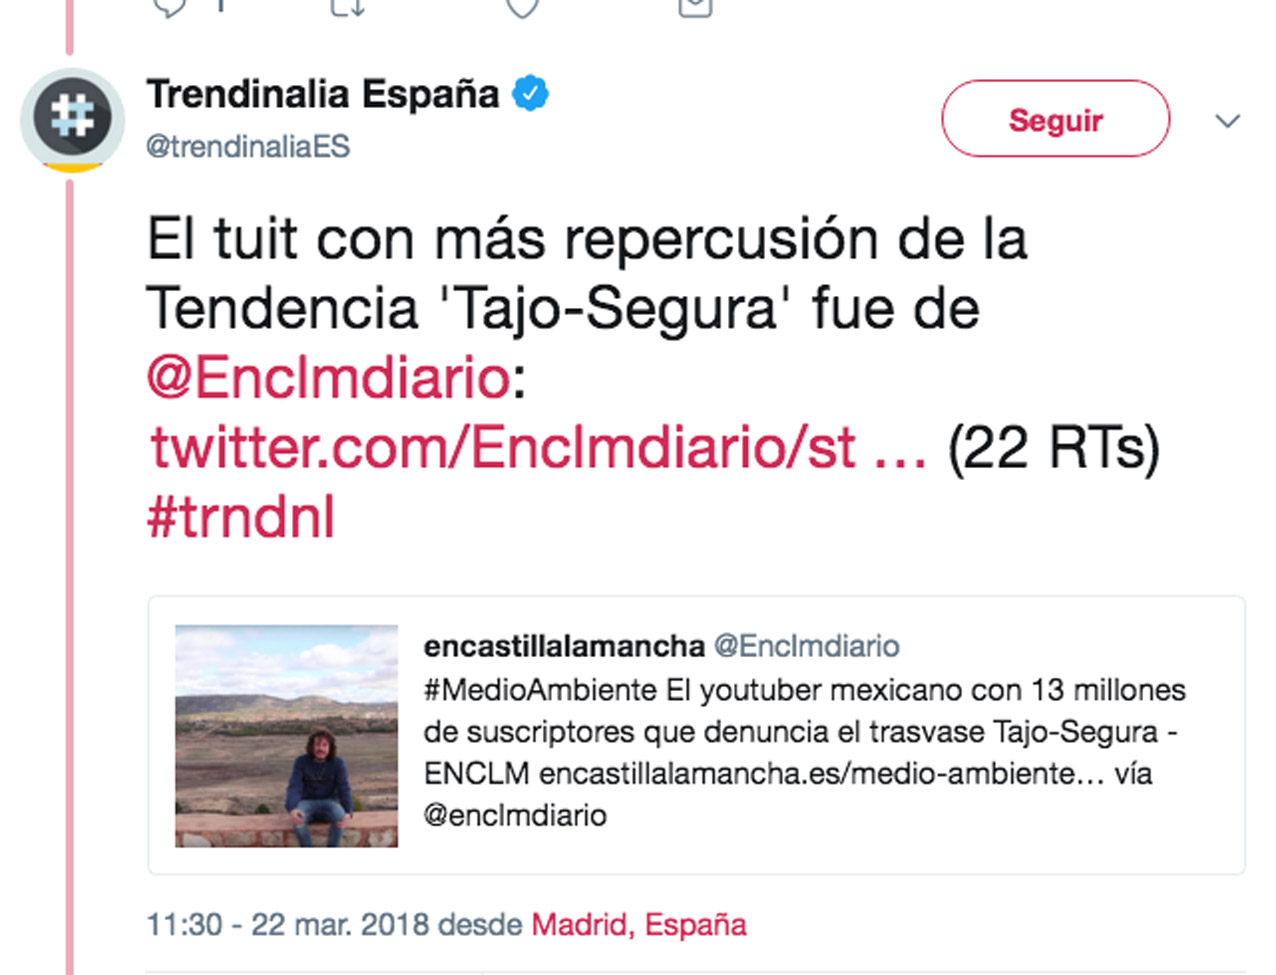 El tuit de Trendinalia España.